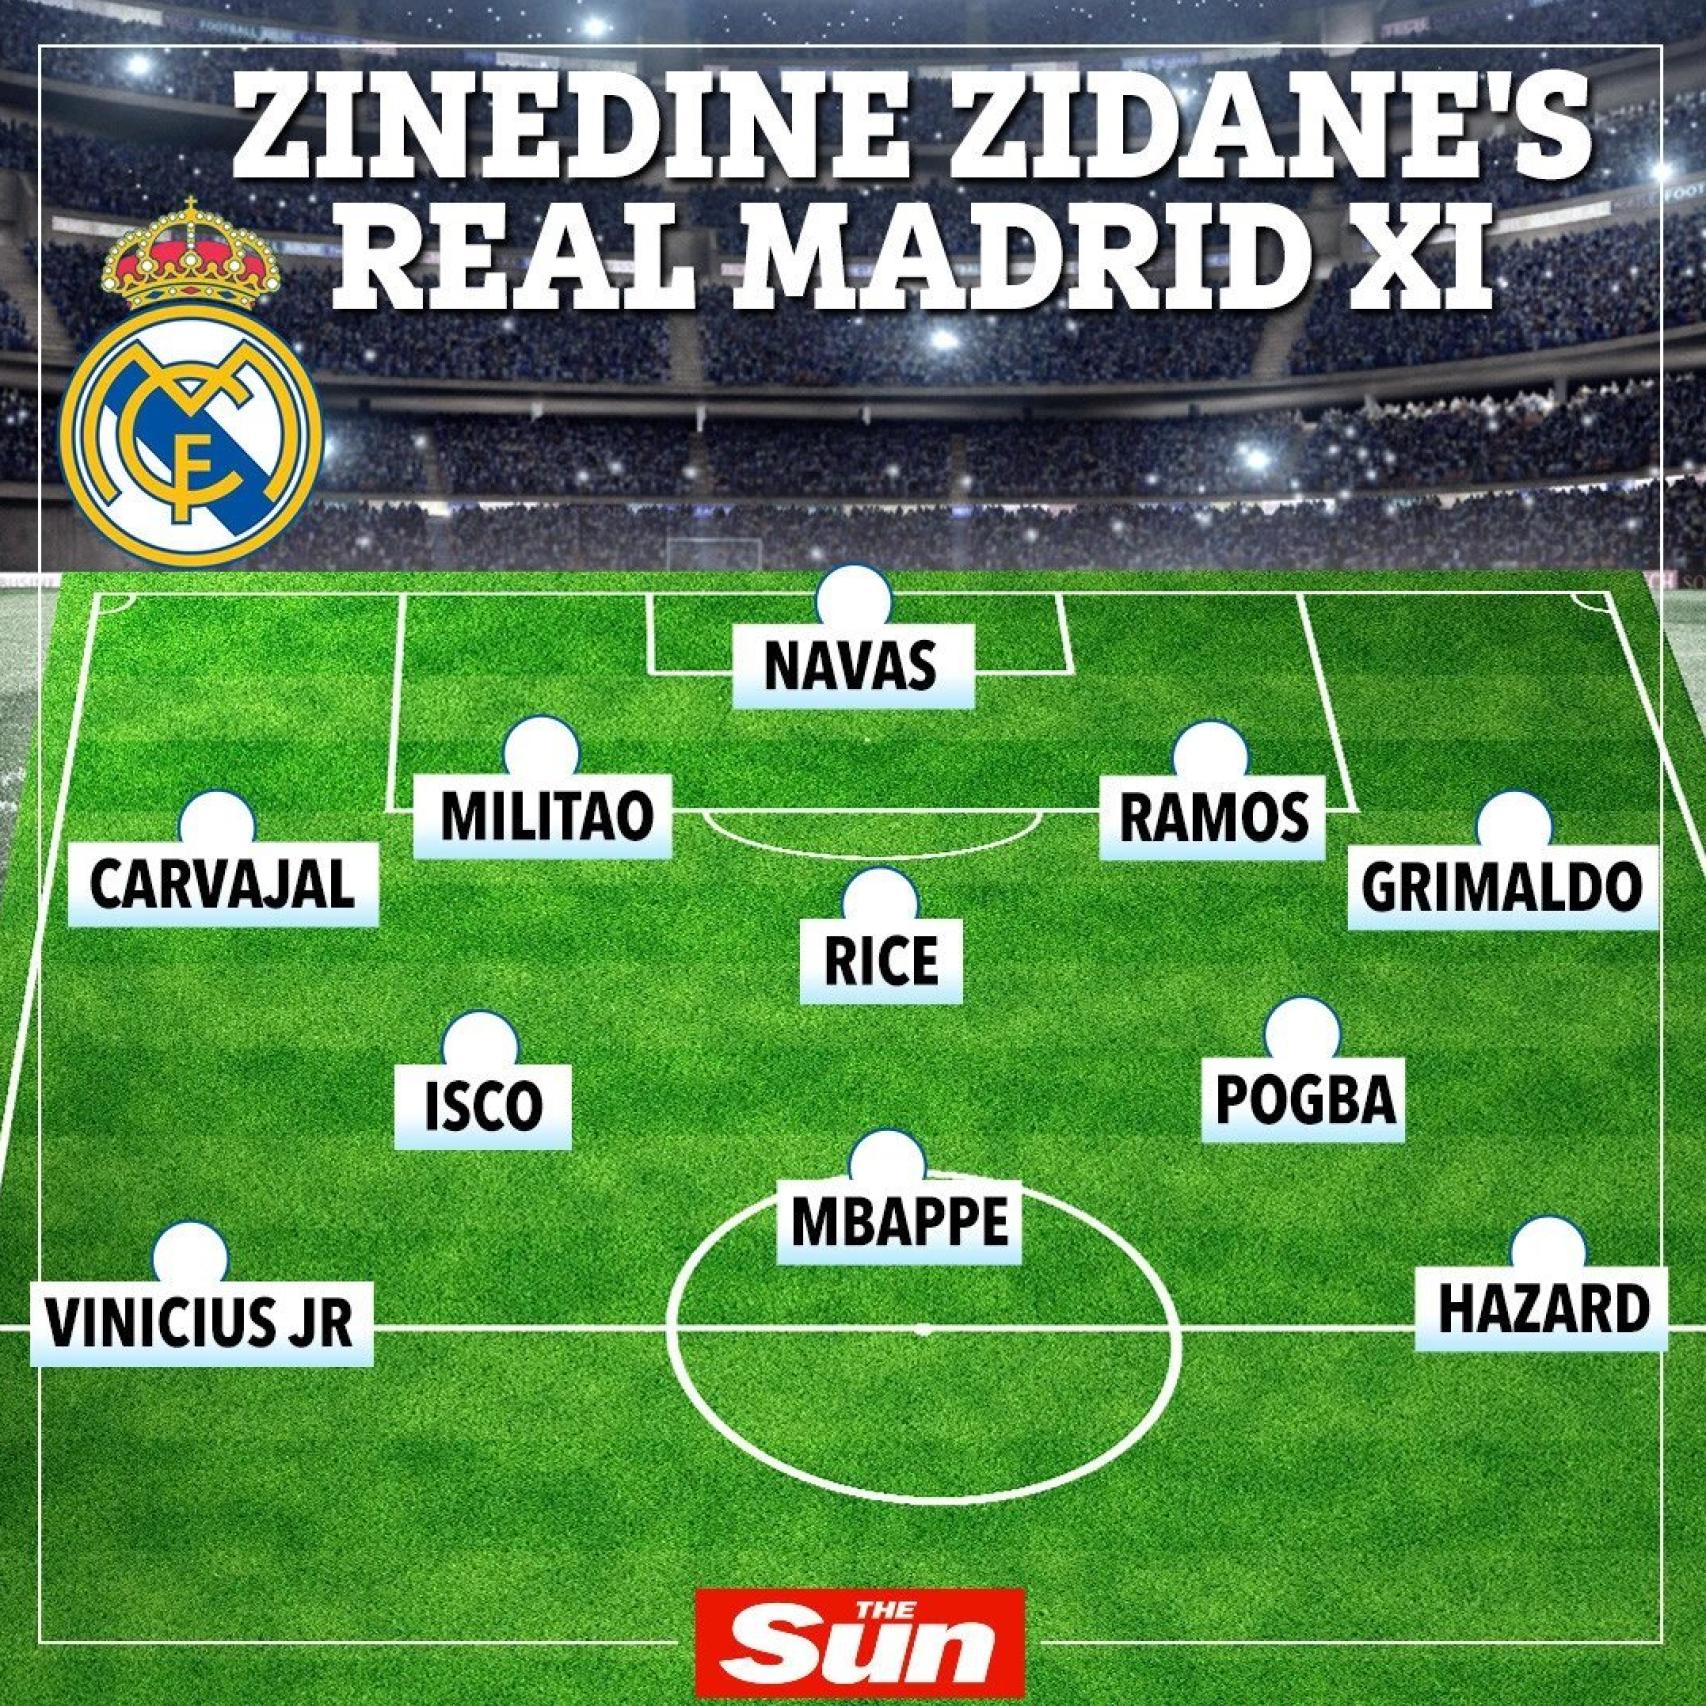 El once del Real Madrid 2019/2020, según The Sun